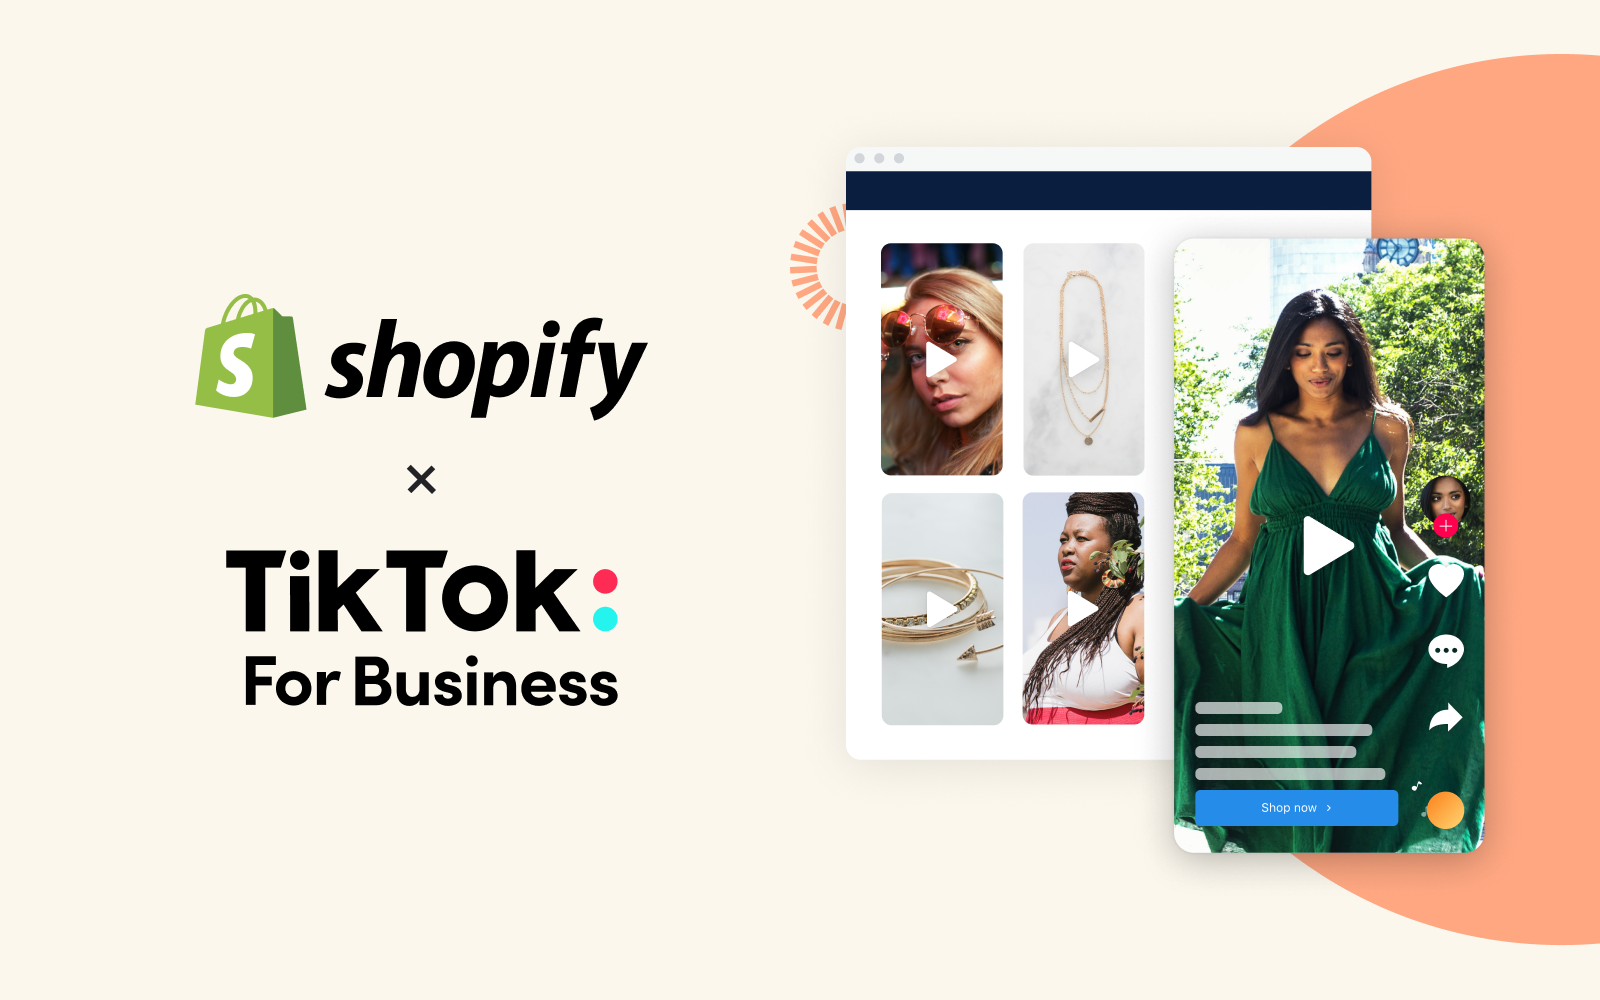 TikTok Shopify